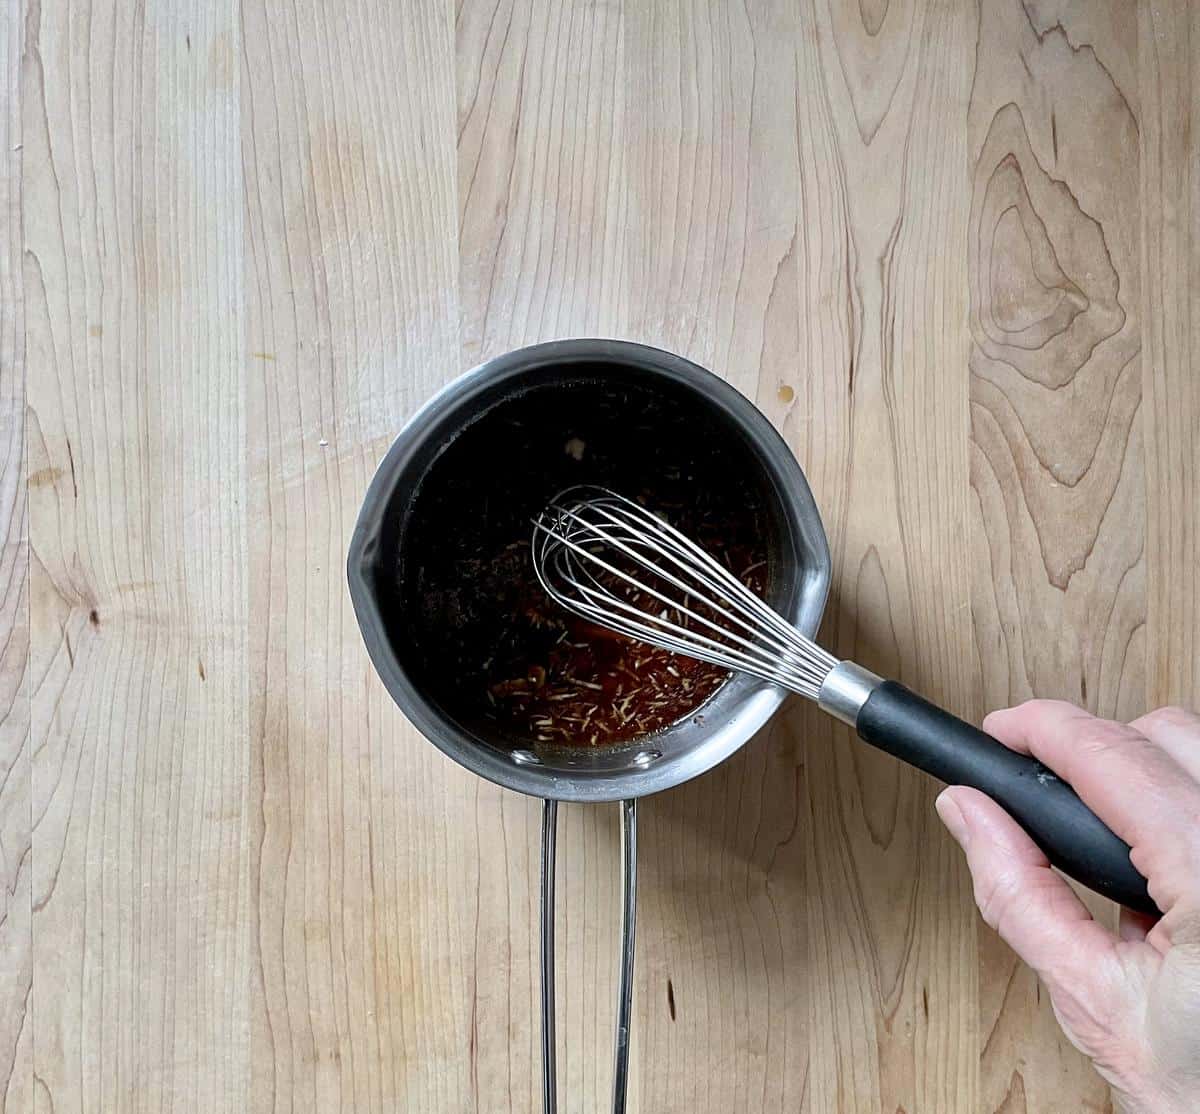 The maple glaze in a small saucepan.